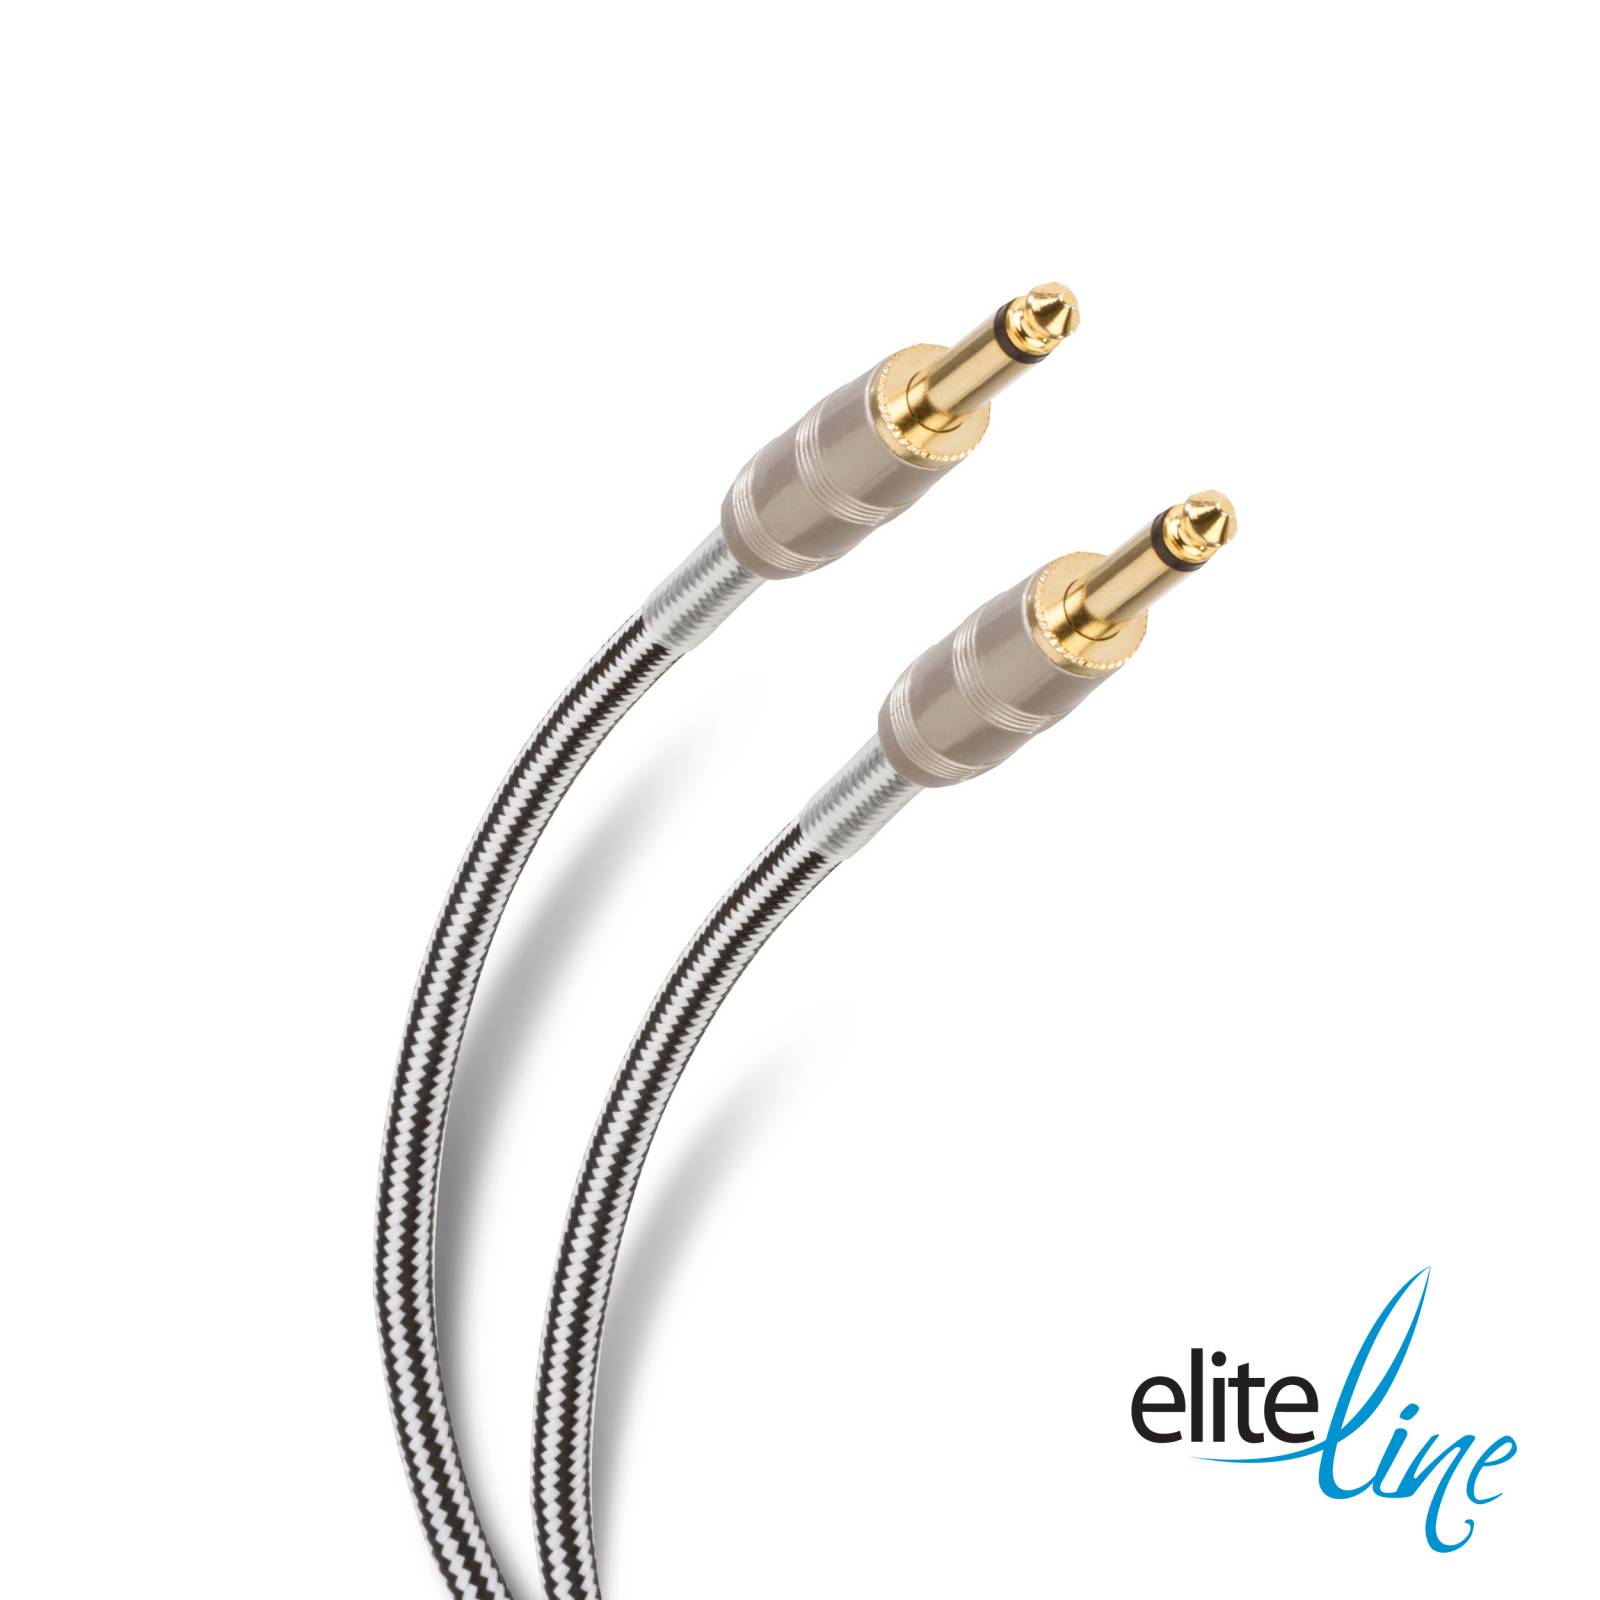 Cable de audio tipo cordón plug a plug 6,3 mm monoaural de 7,2 m